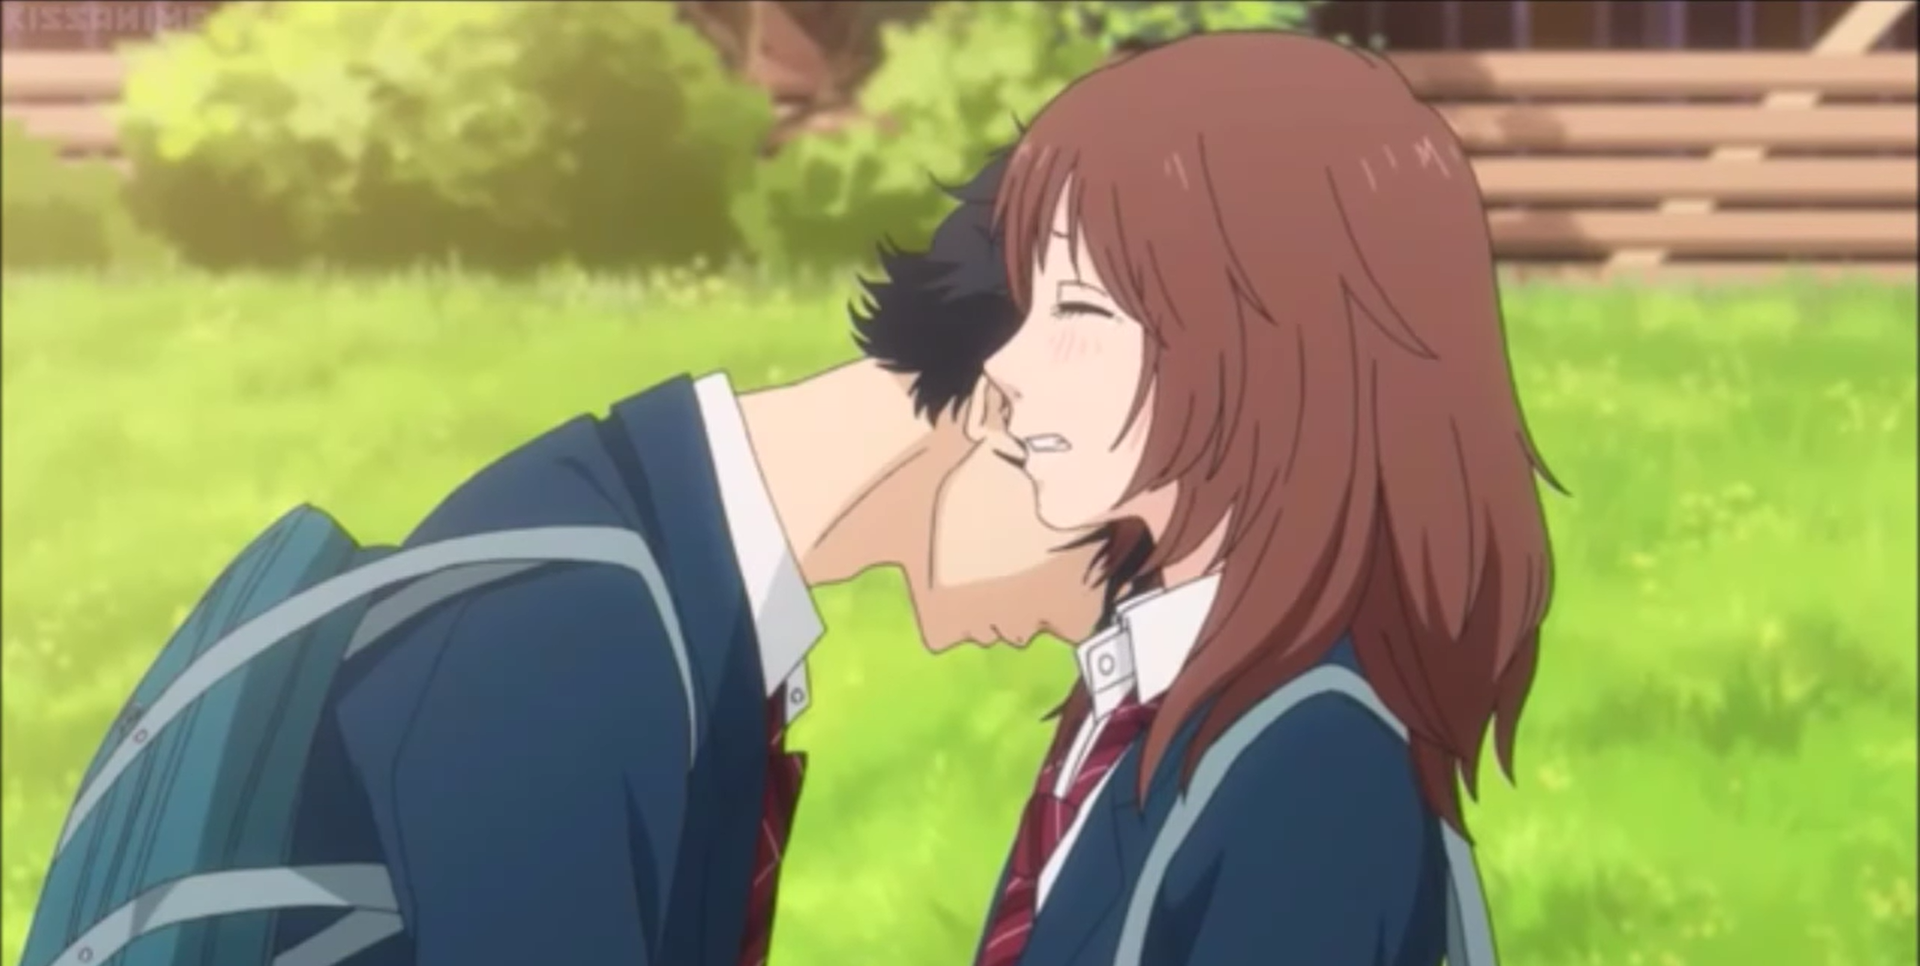 The Hidden Side of High School Romance #horimiya #anime #aniwave